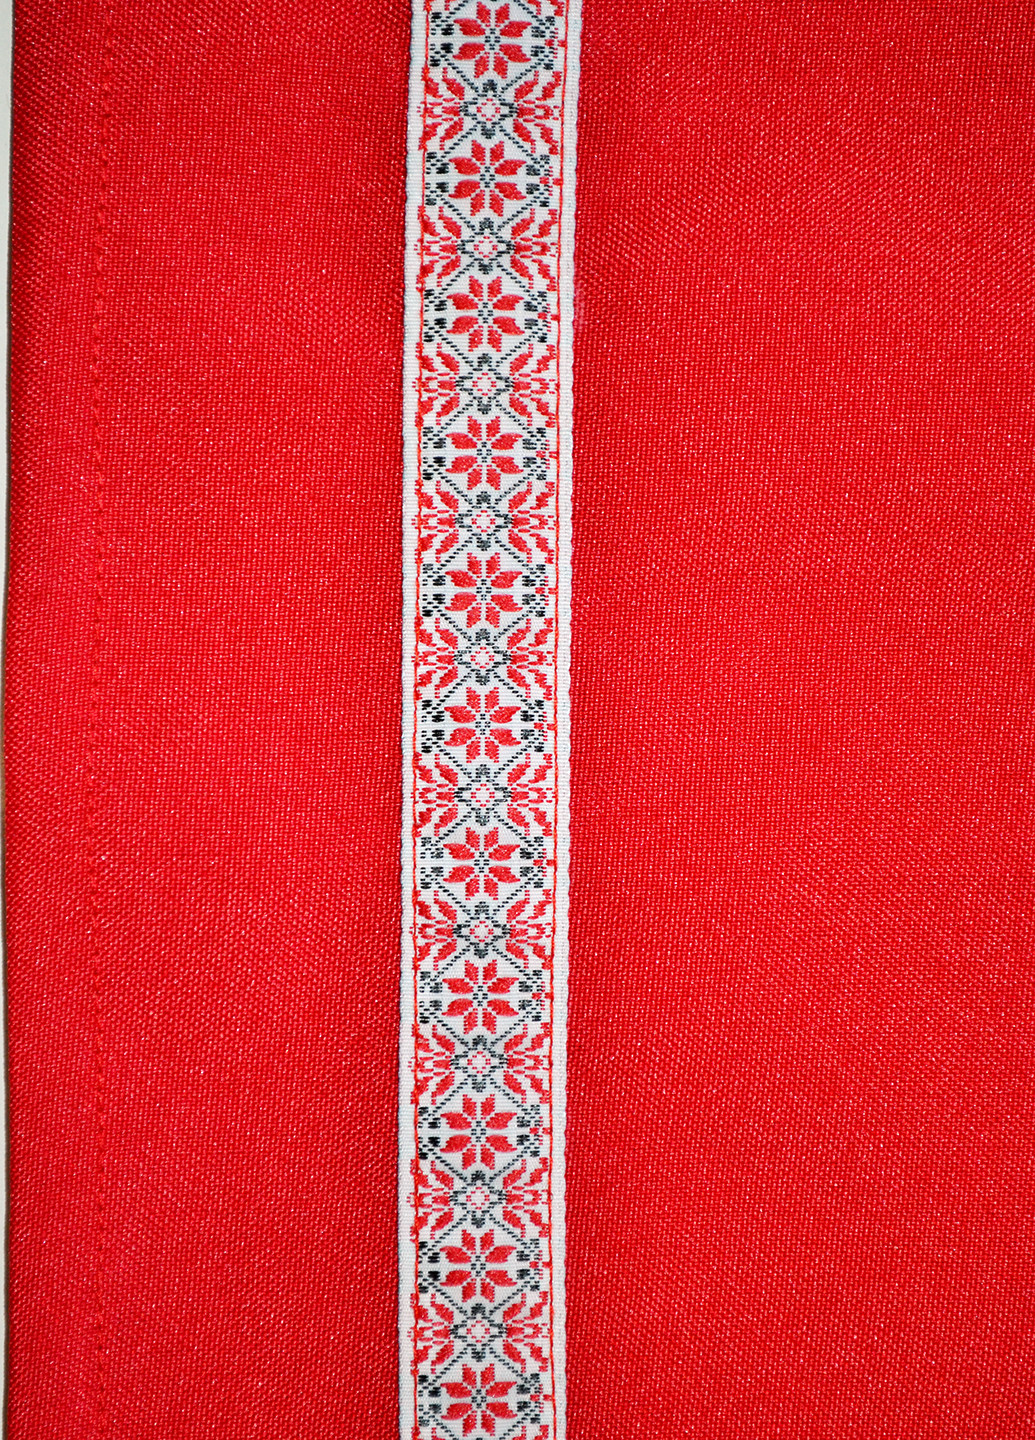 Красная с орнаментом юбка DavLu а-силуэта (трапеция)